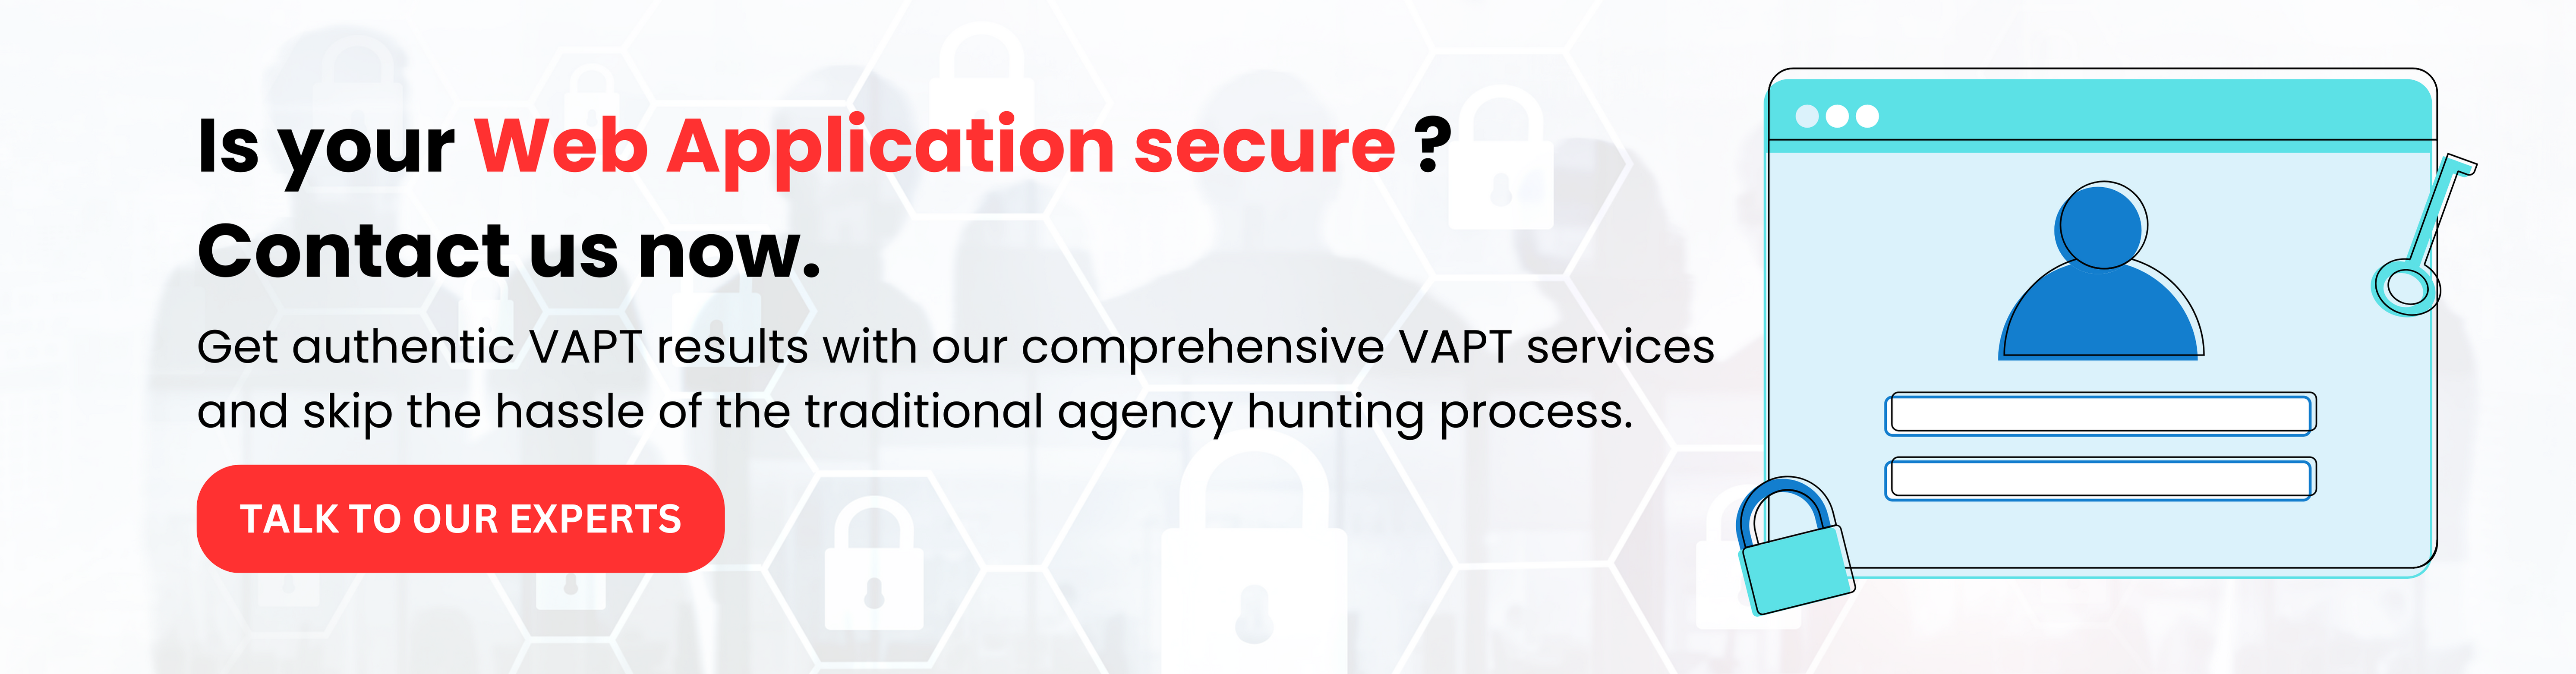 Secure Web Application and VAPT service